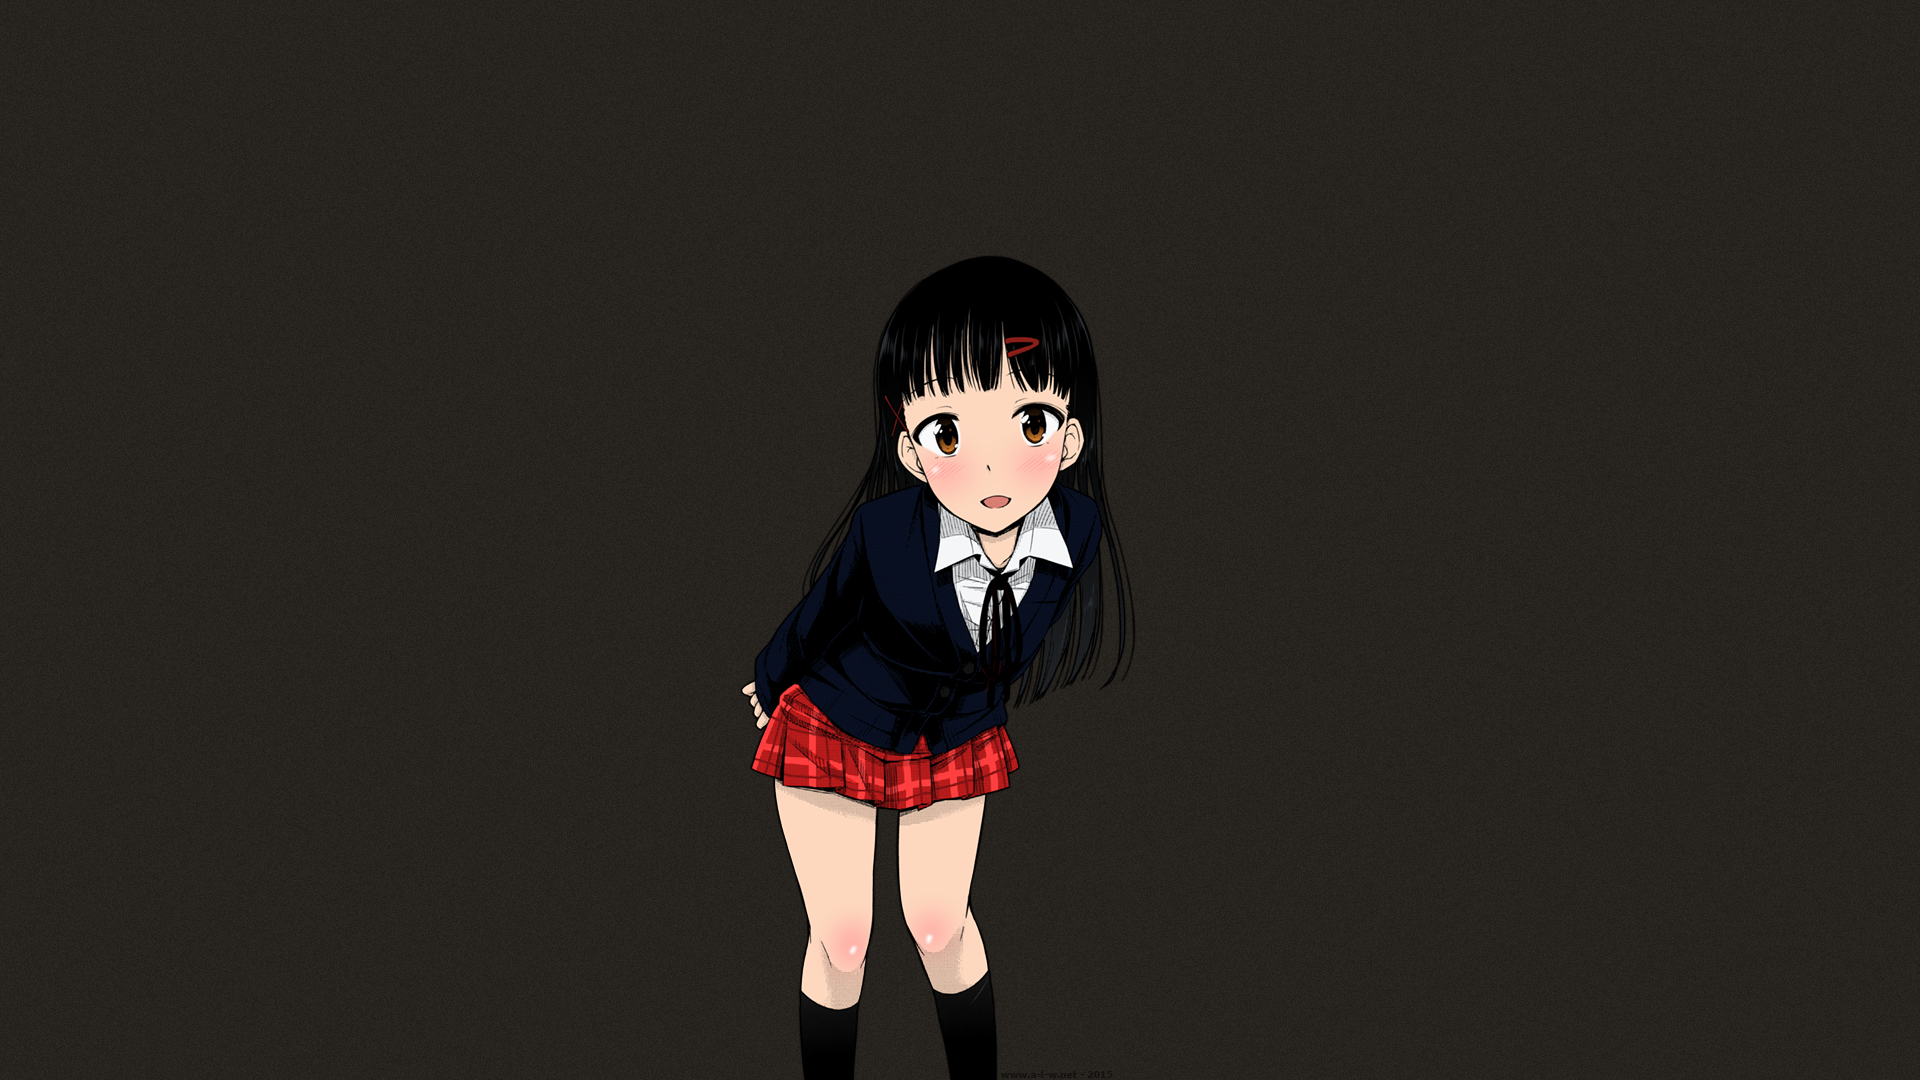 Anime 1920x1080 long hair black hair dark hair school uniform schoolgirl miniskirt socks anime manga anime girls looking at viewer